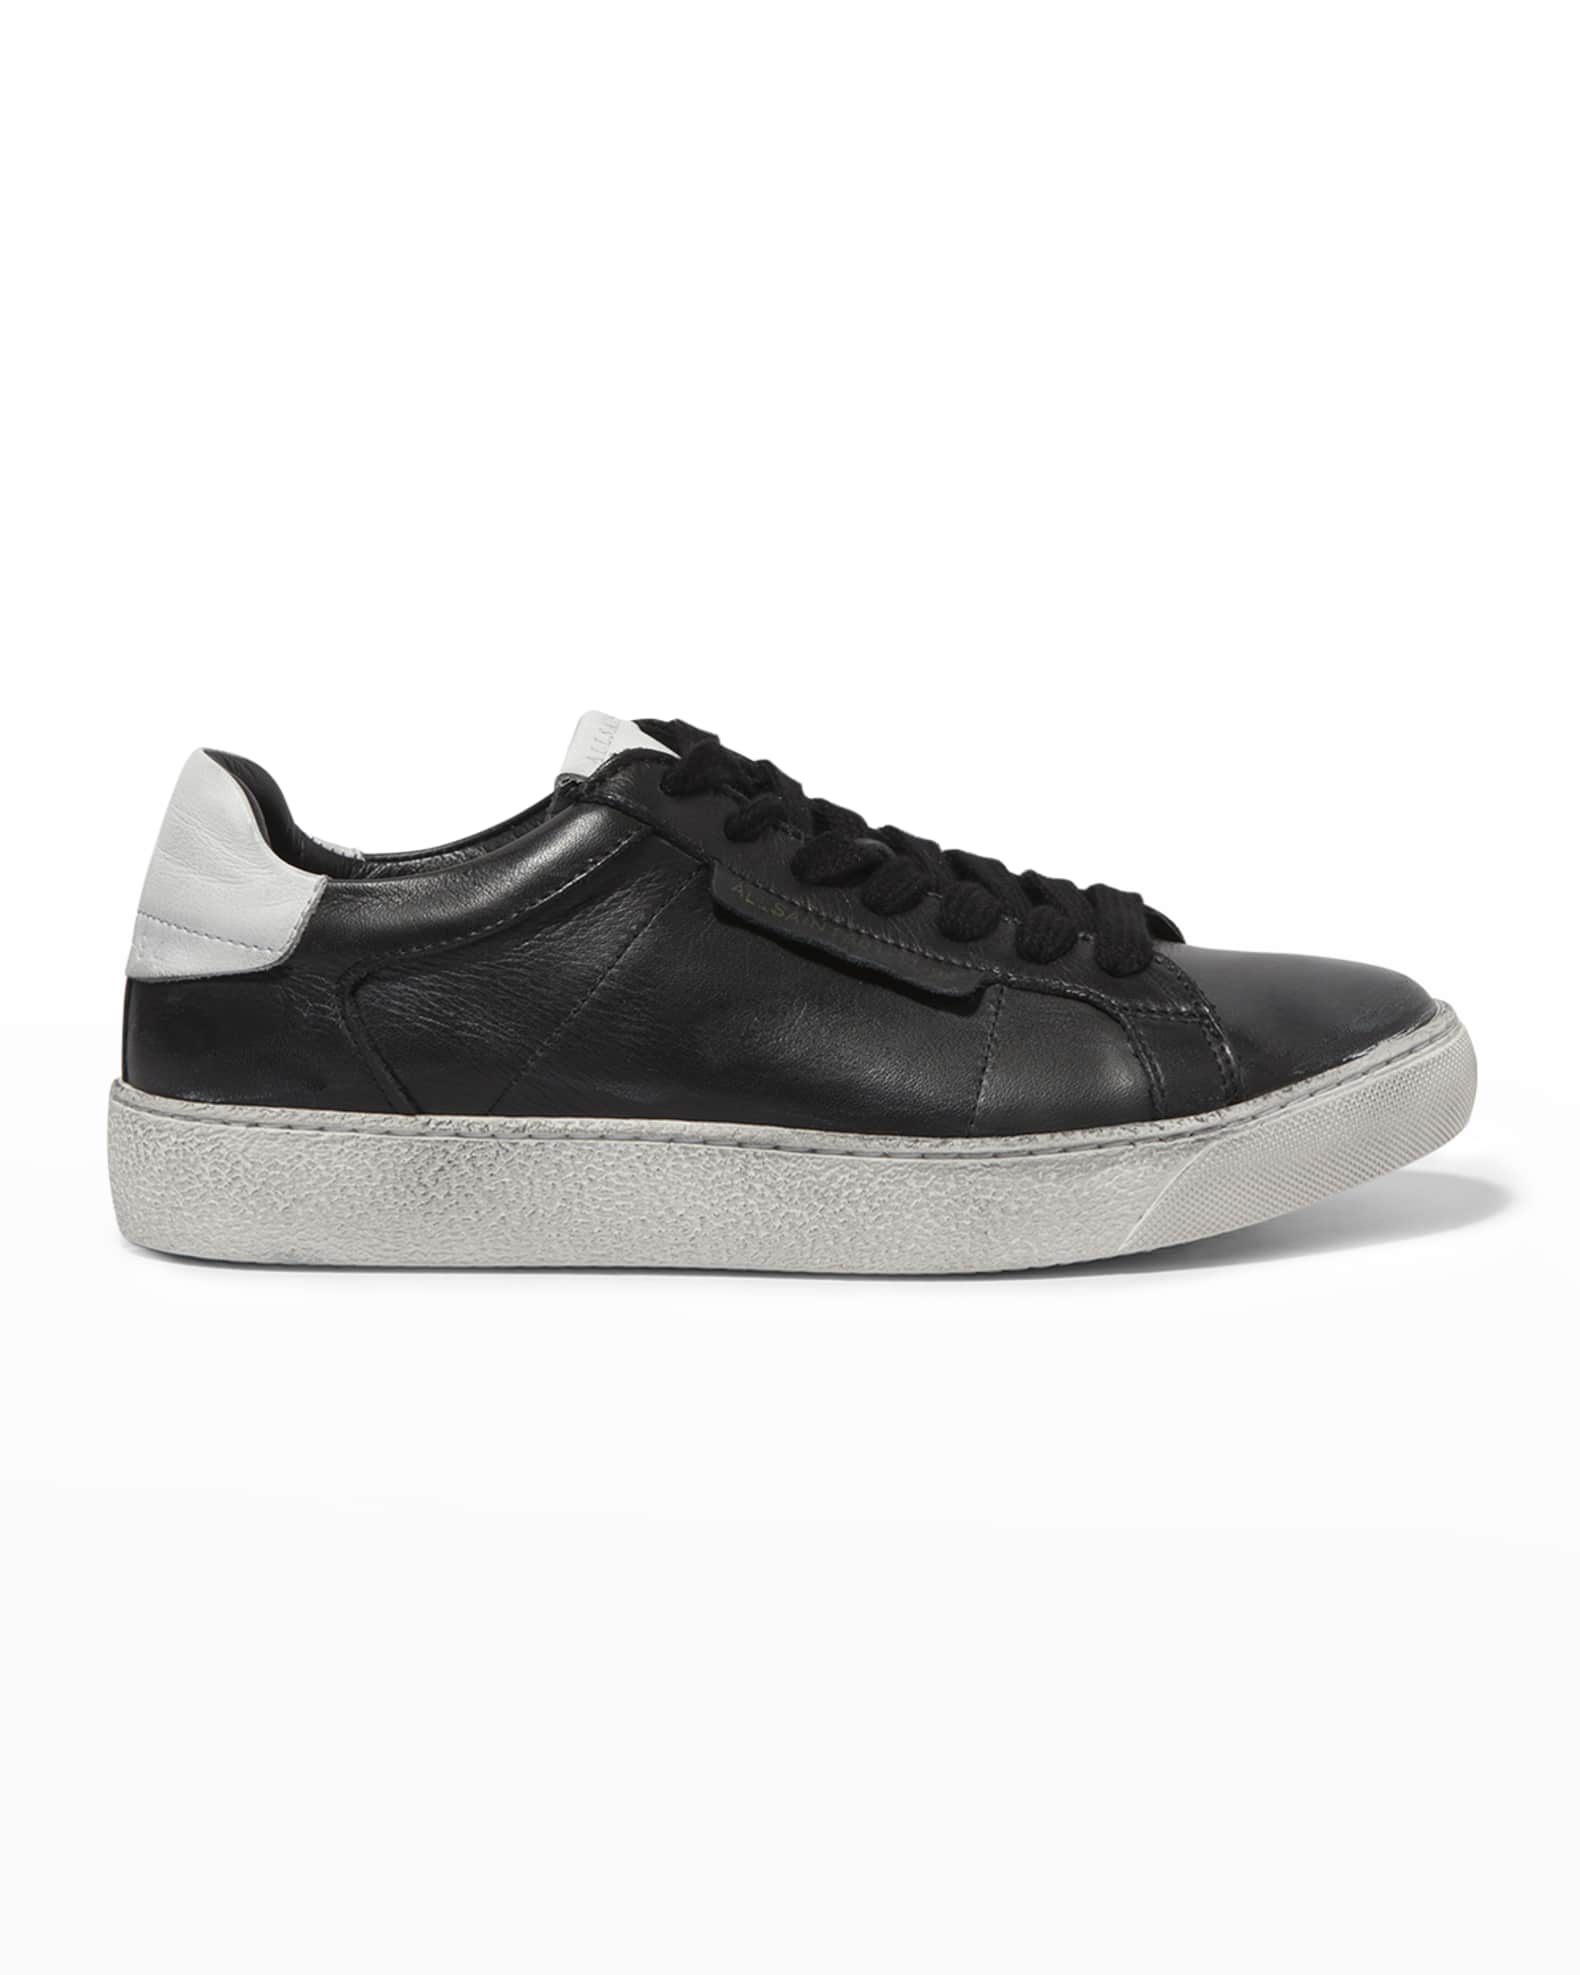 AllSaints Sheer Bicolor Leather Sneakers | Neiman Marcus